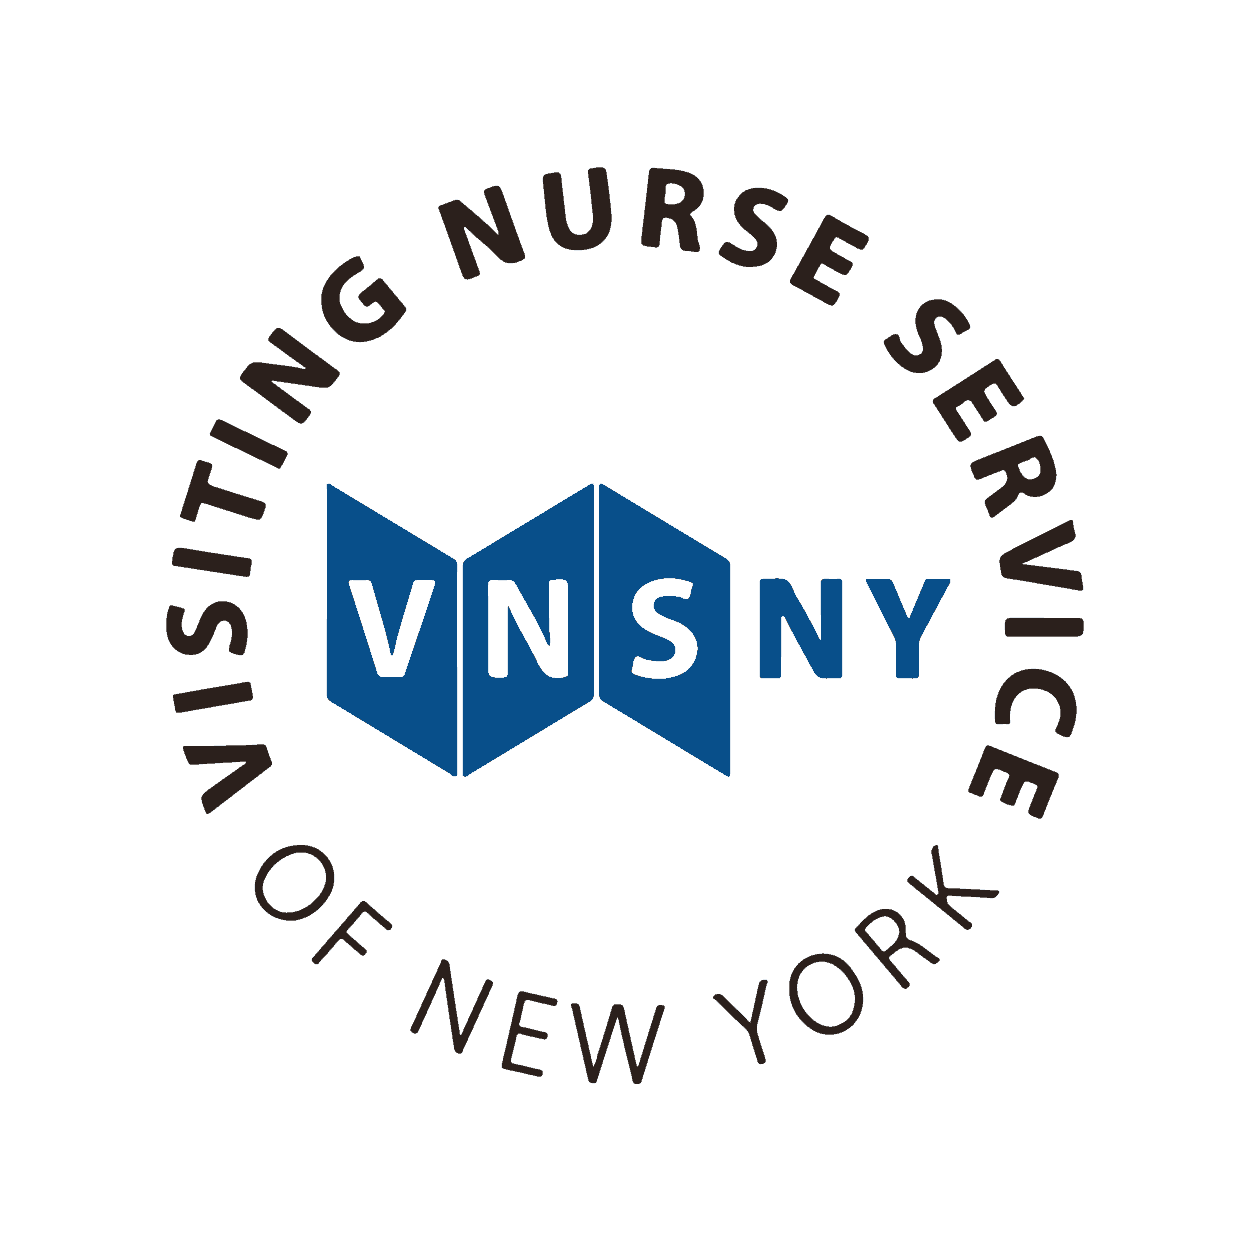 peoplesoft 9.2 upgrade visiting nurse service of new york